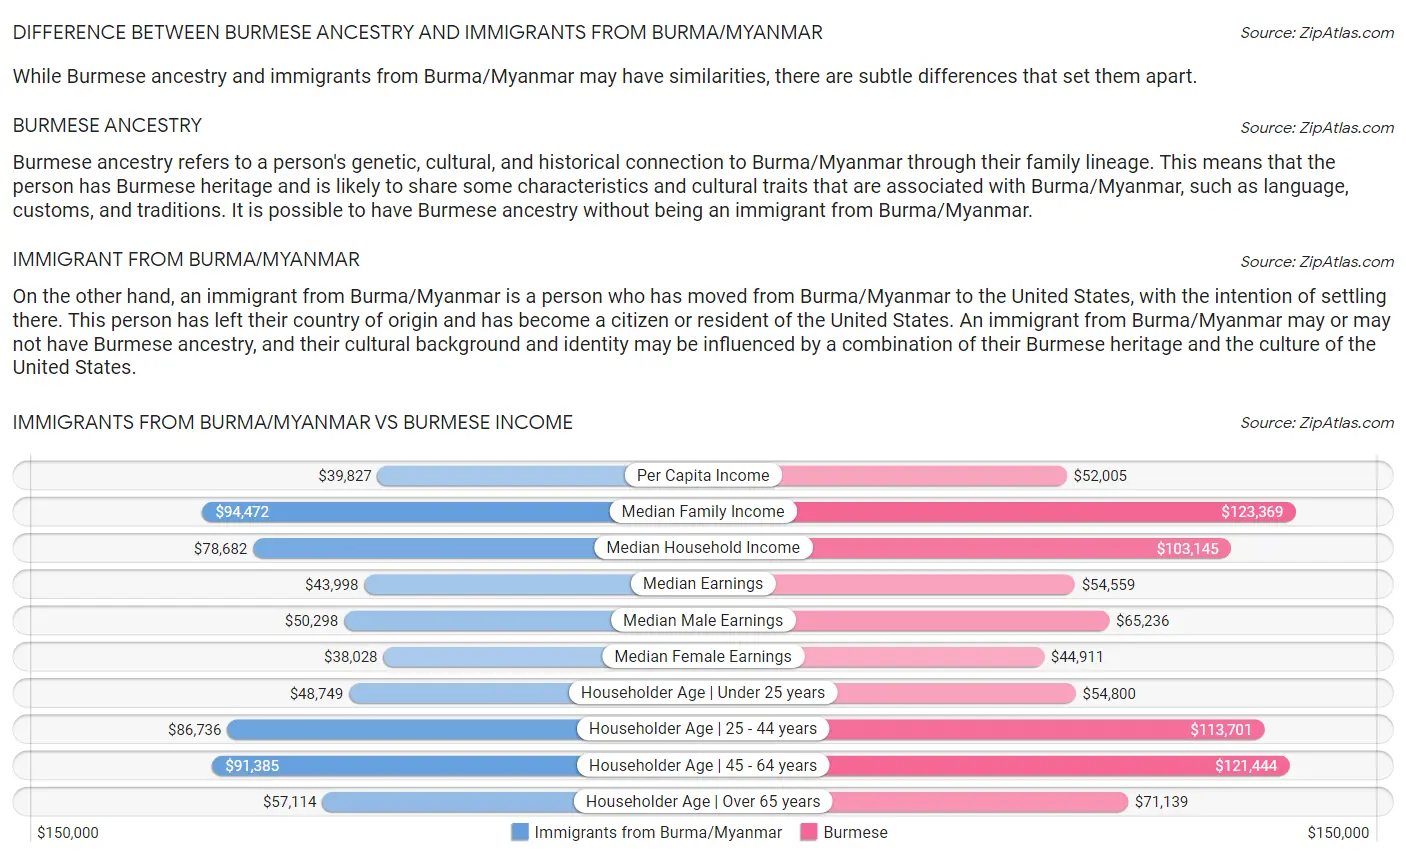 Immigrants from Burma/Myanmar vs Burmese Income